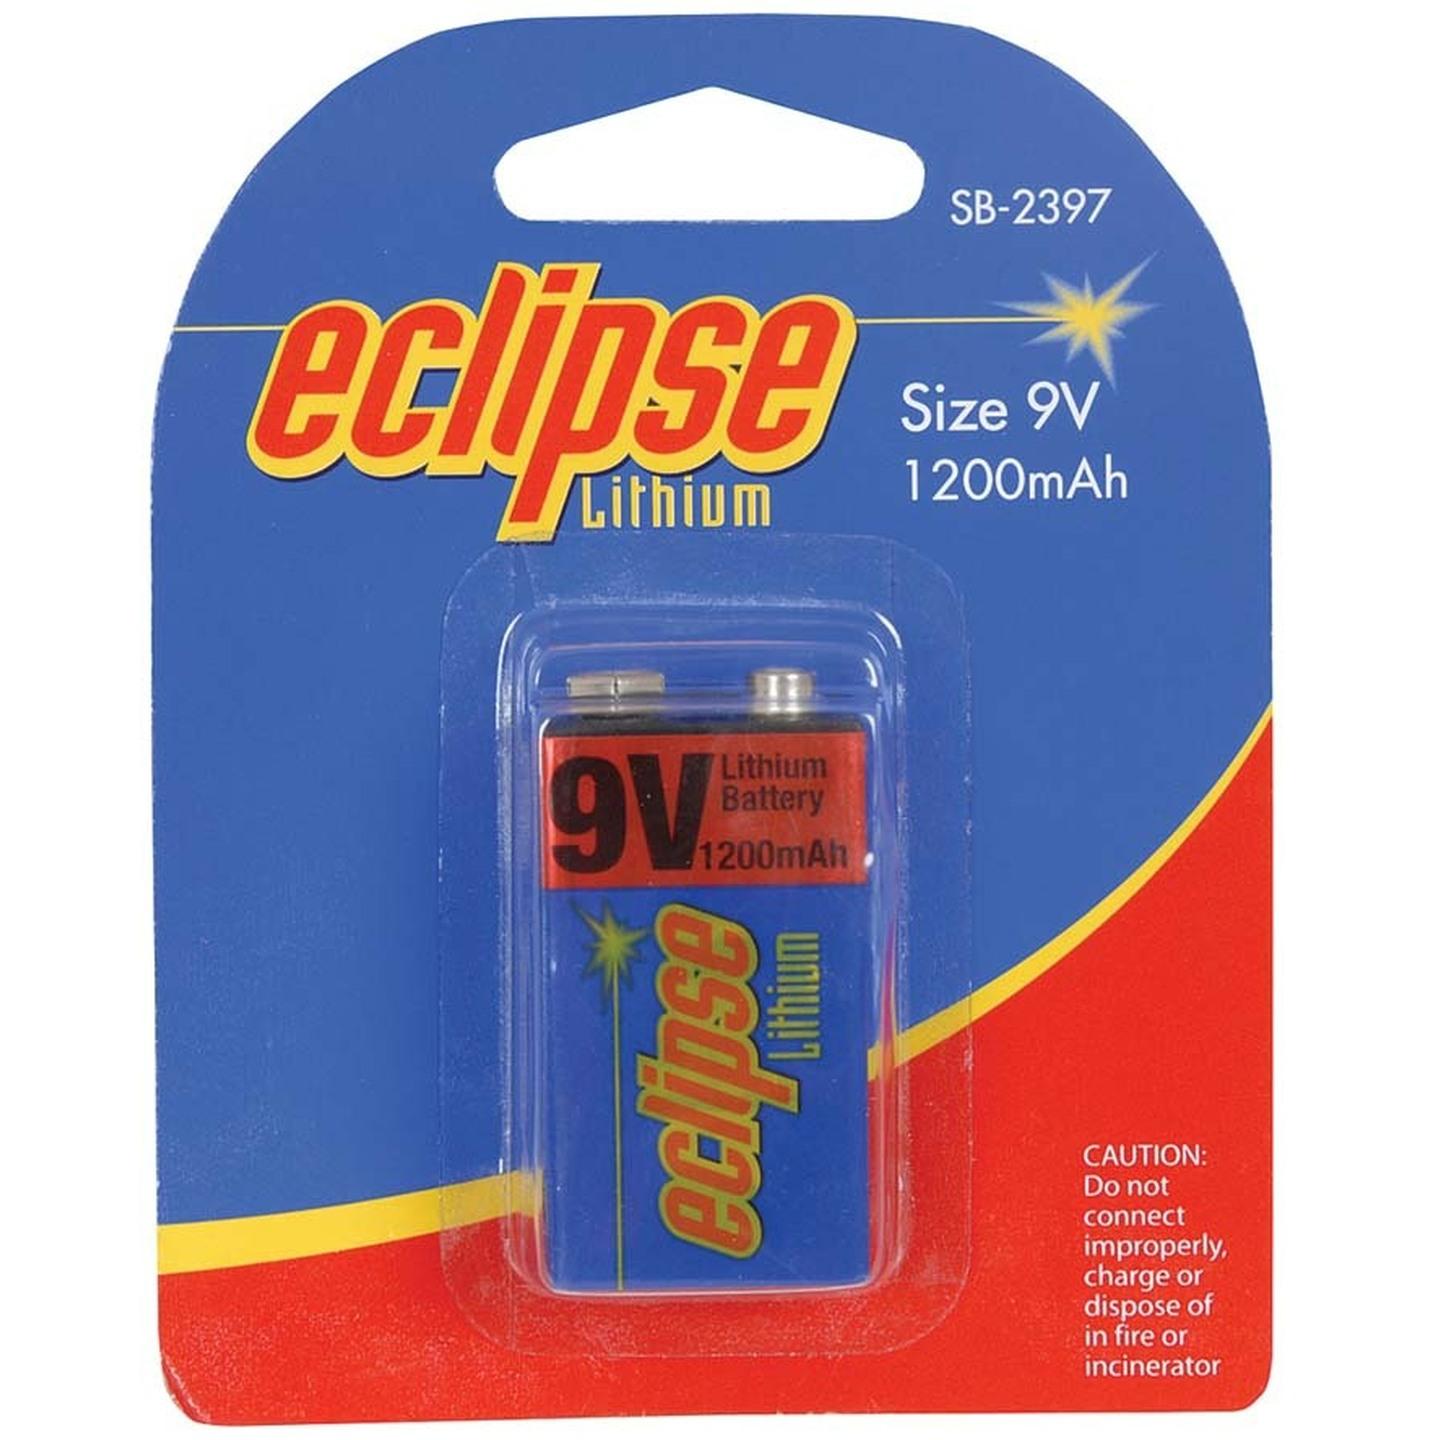 Eclipse 9V Lithium Battery